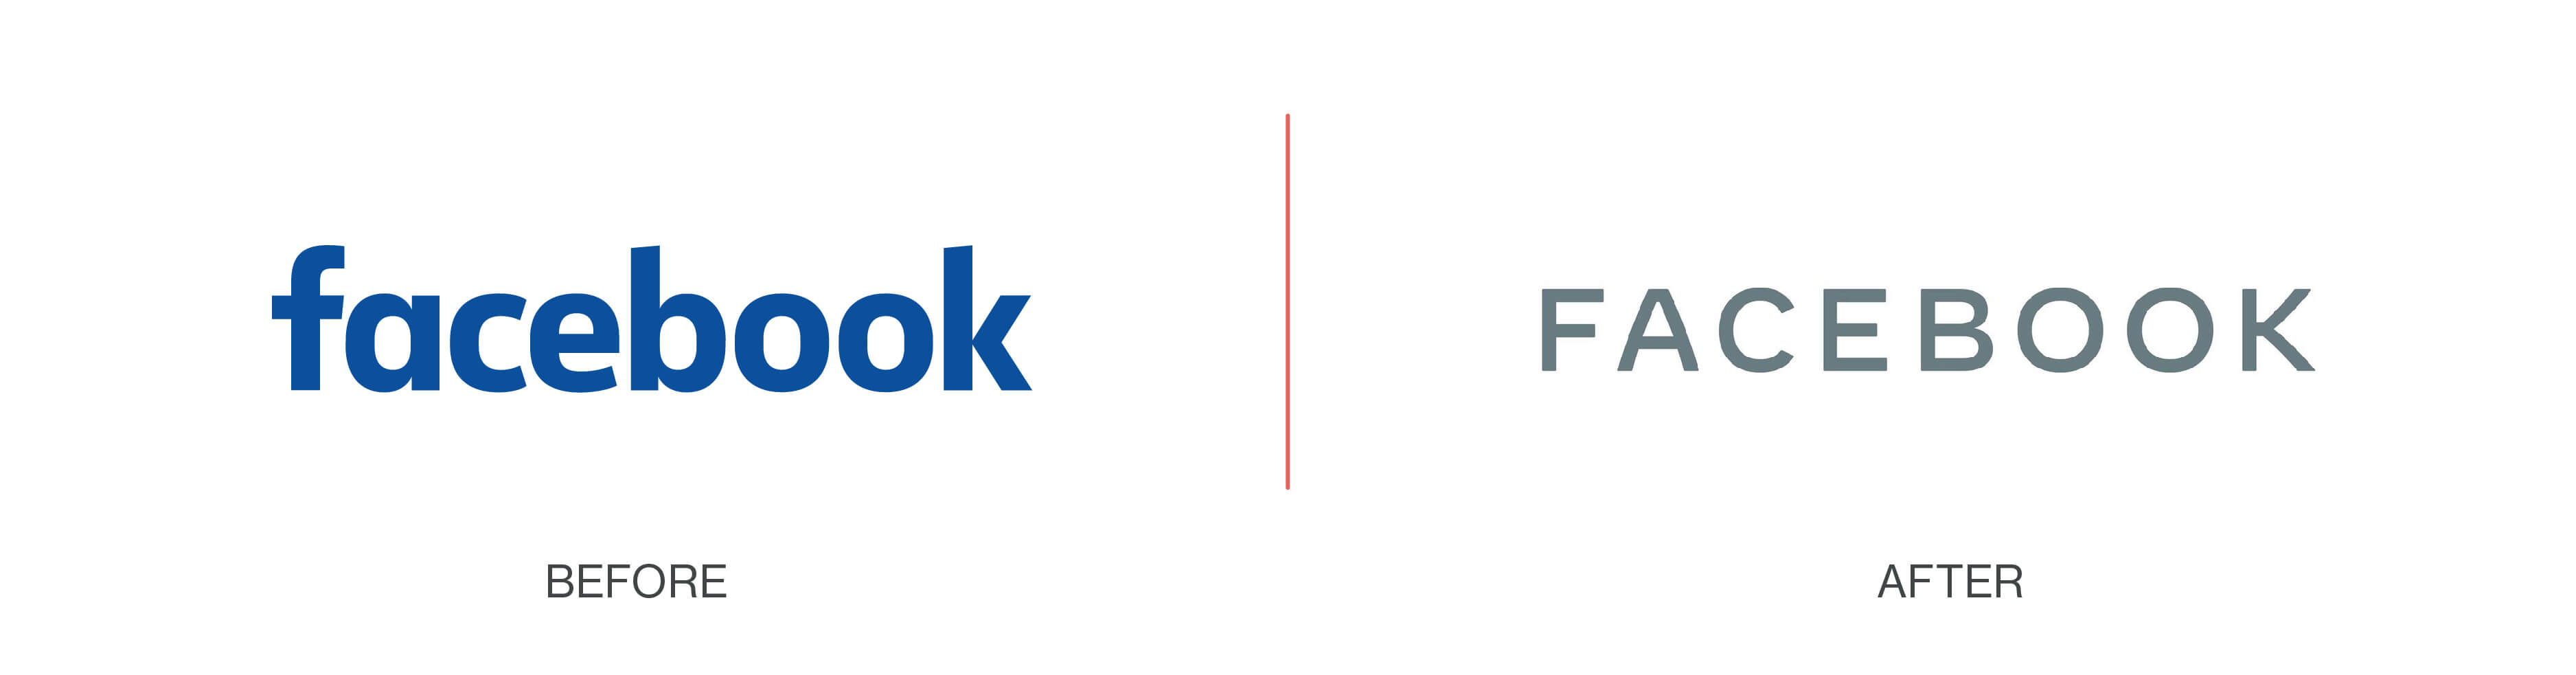 Papirfly-Blog_Iconic-logos-Facebook